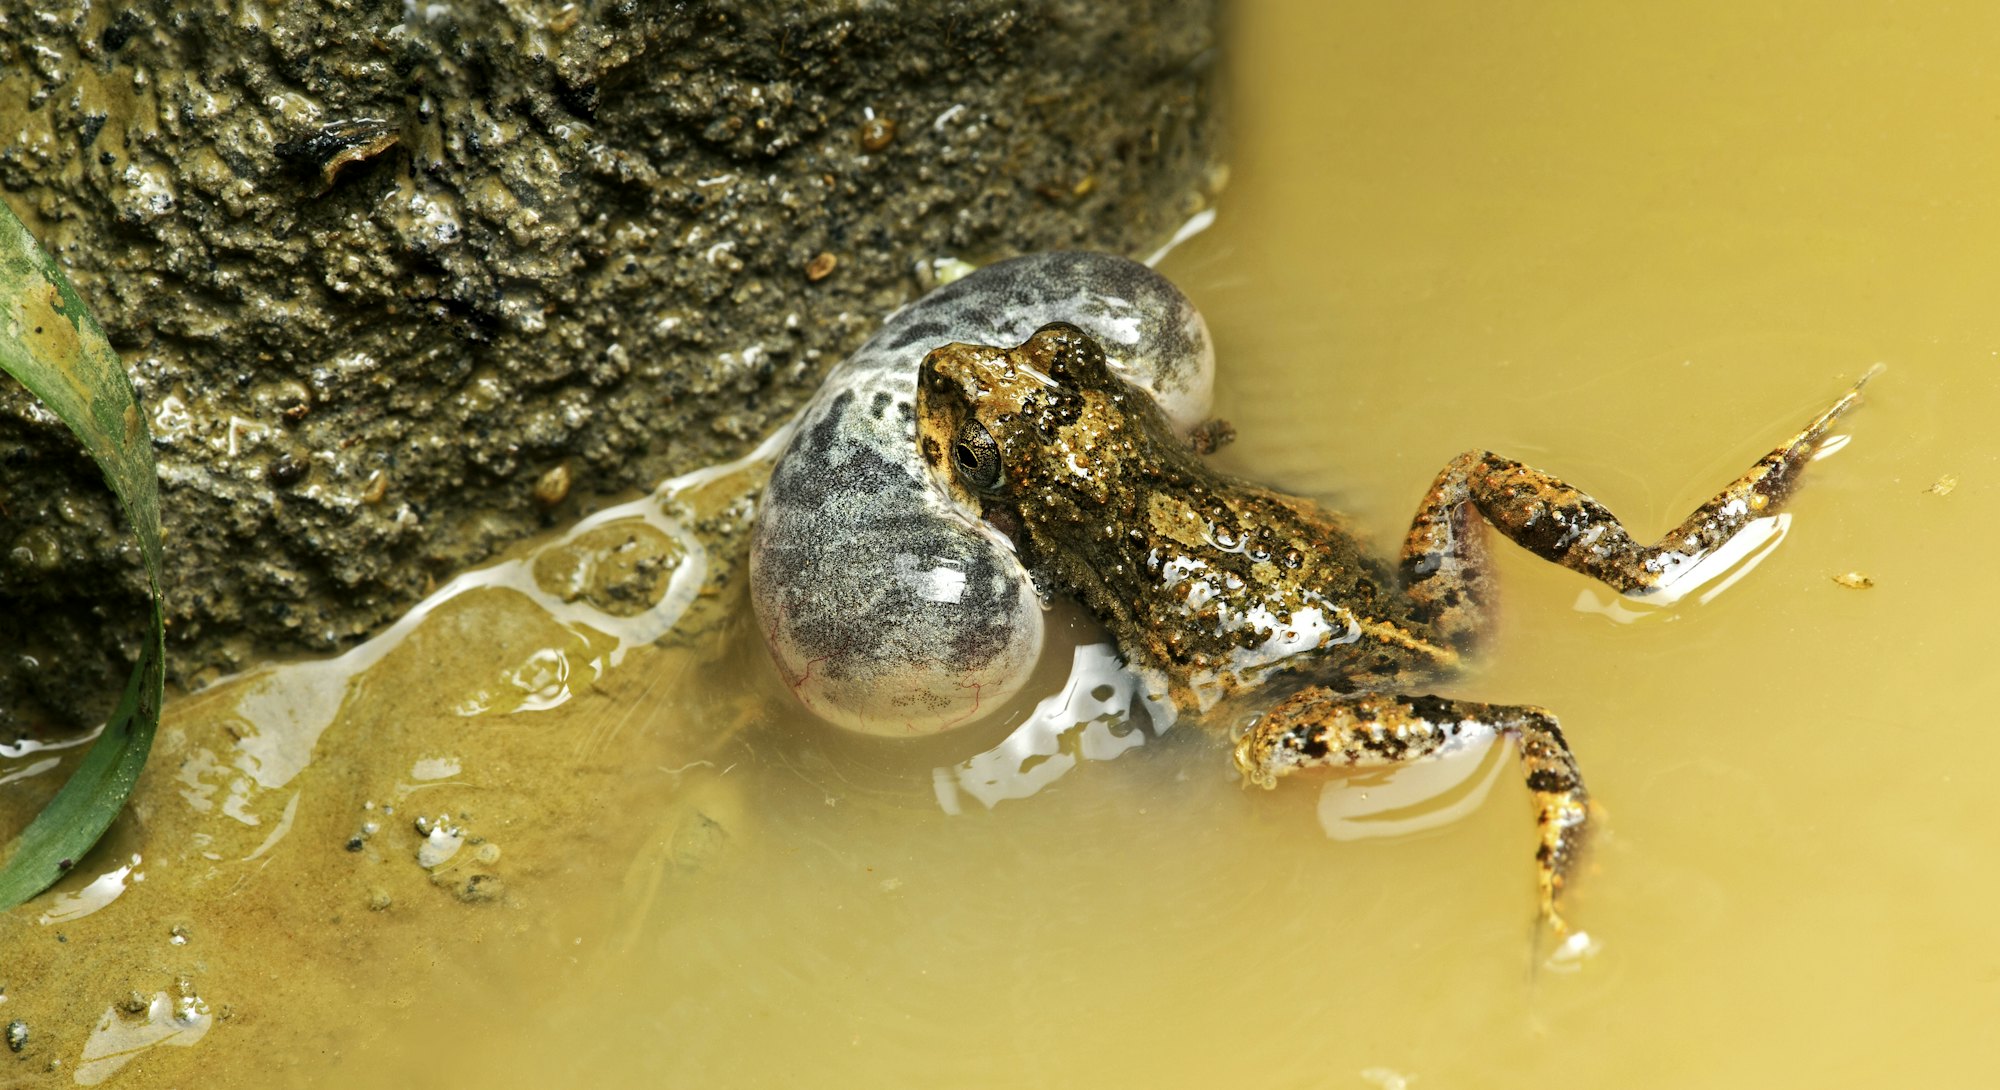 Male, Tungara frog (Engystomops pustulosus) in water